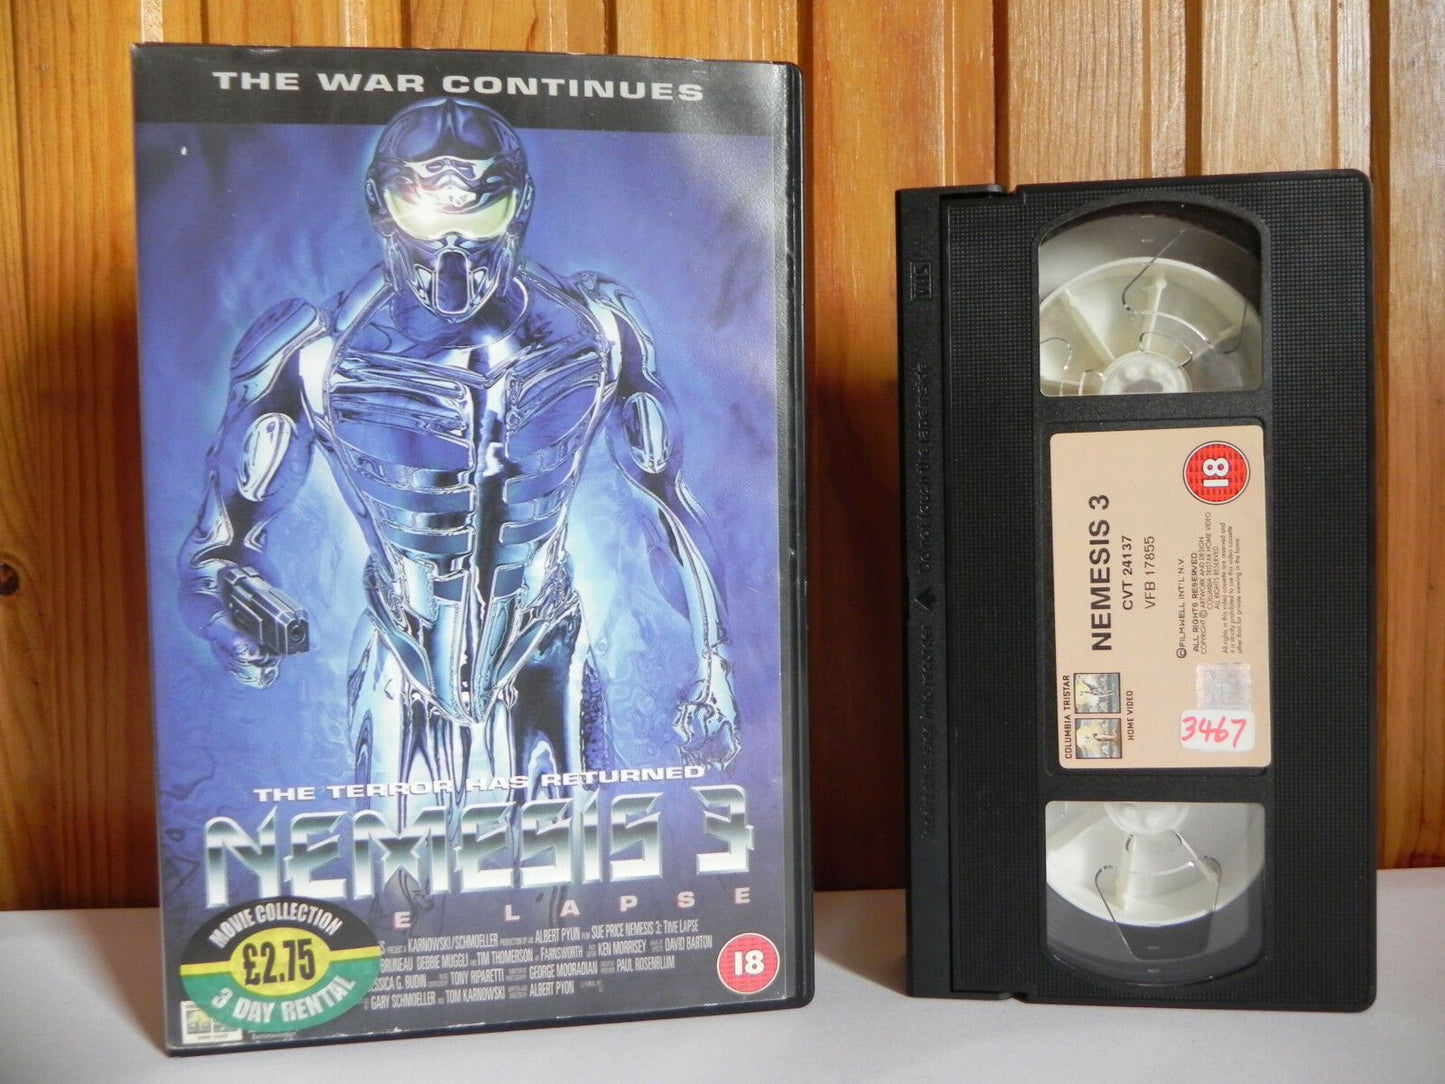 Nemesis 3: Time Lapse - Columbia Tristar - Sci-Fi - Action - Large Box - Pal VHS - Golden Class Movies LTD